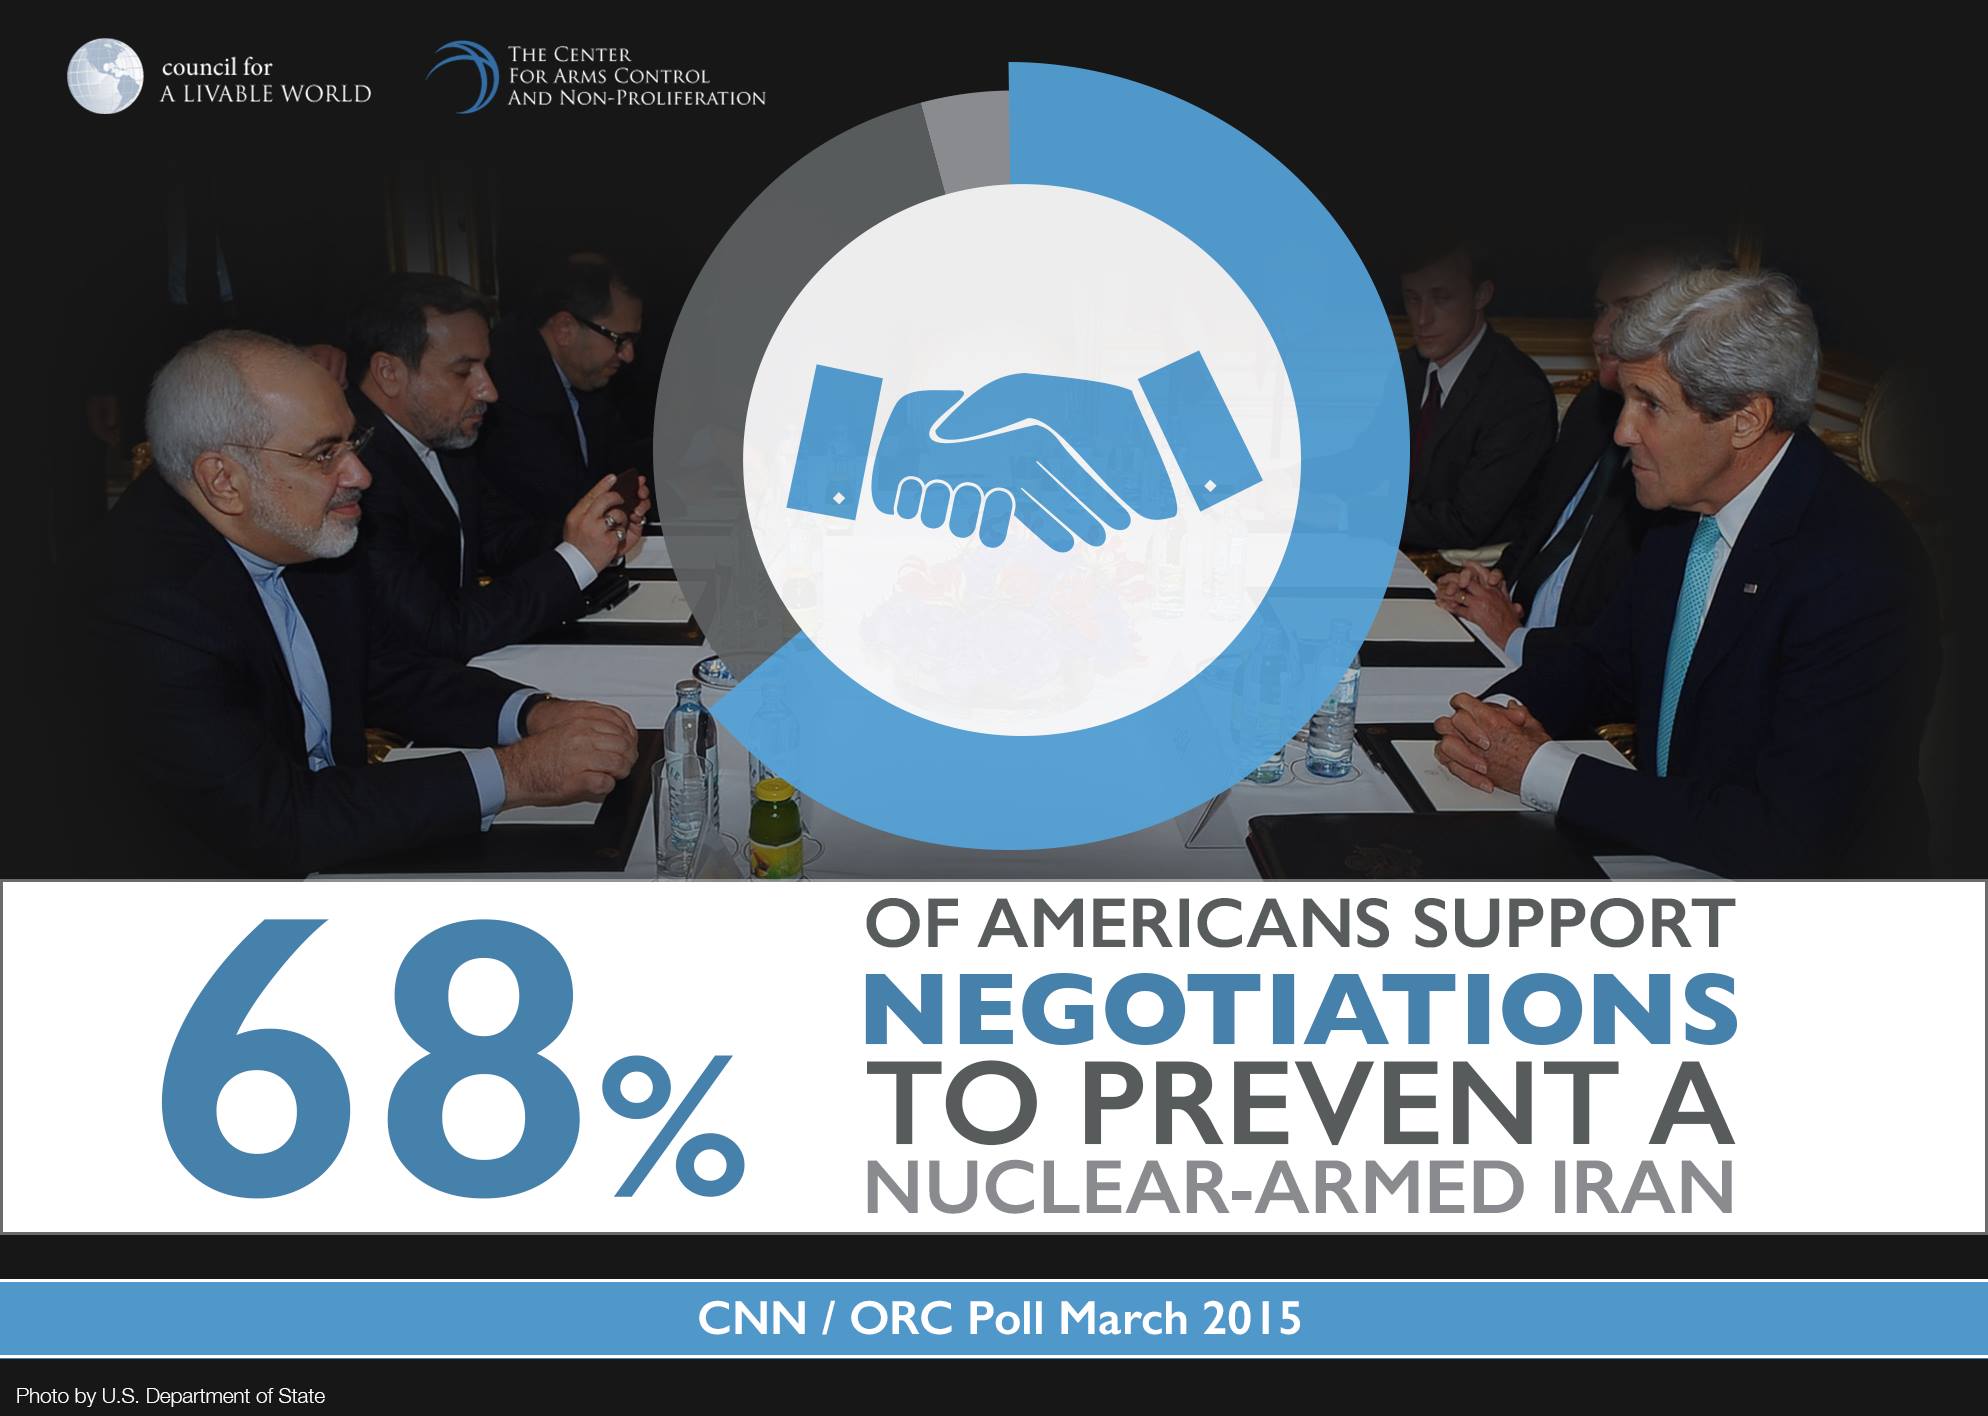 CNN Poll on American Support for Iran Talks